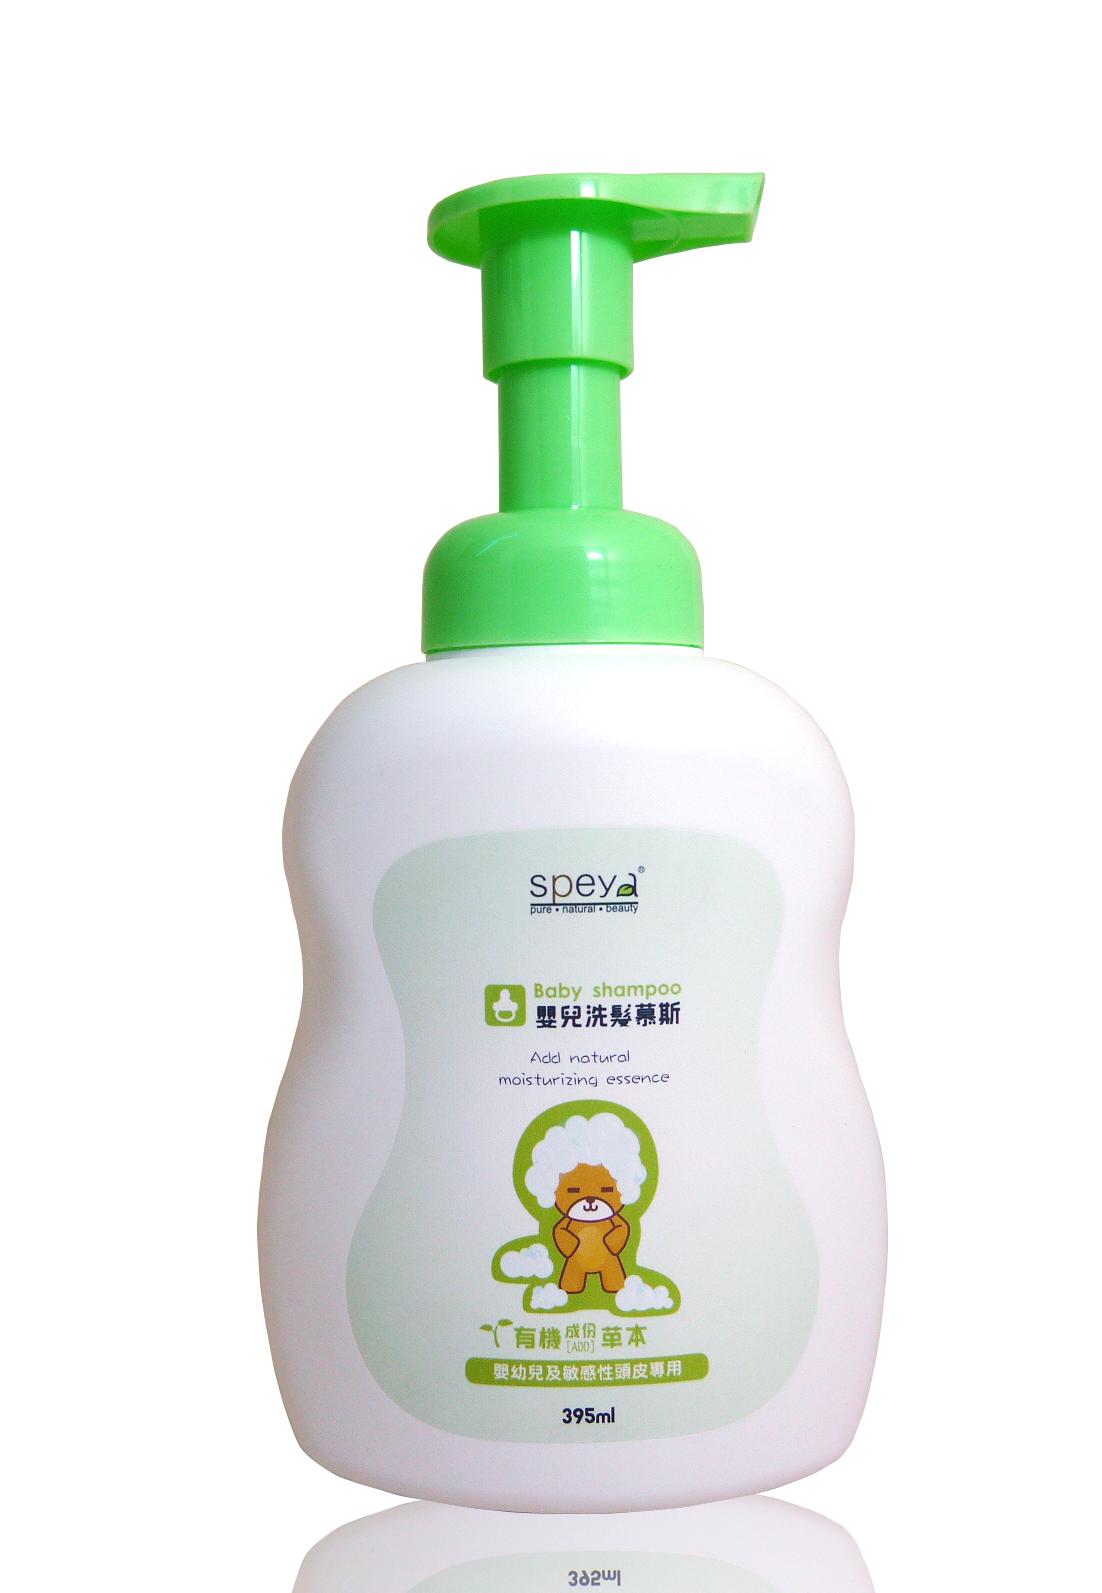 SPEYA Organic Baby Shampoo Foam Mousse (395ml)